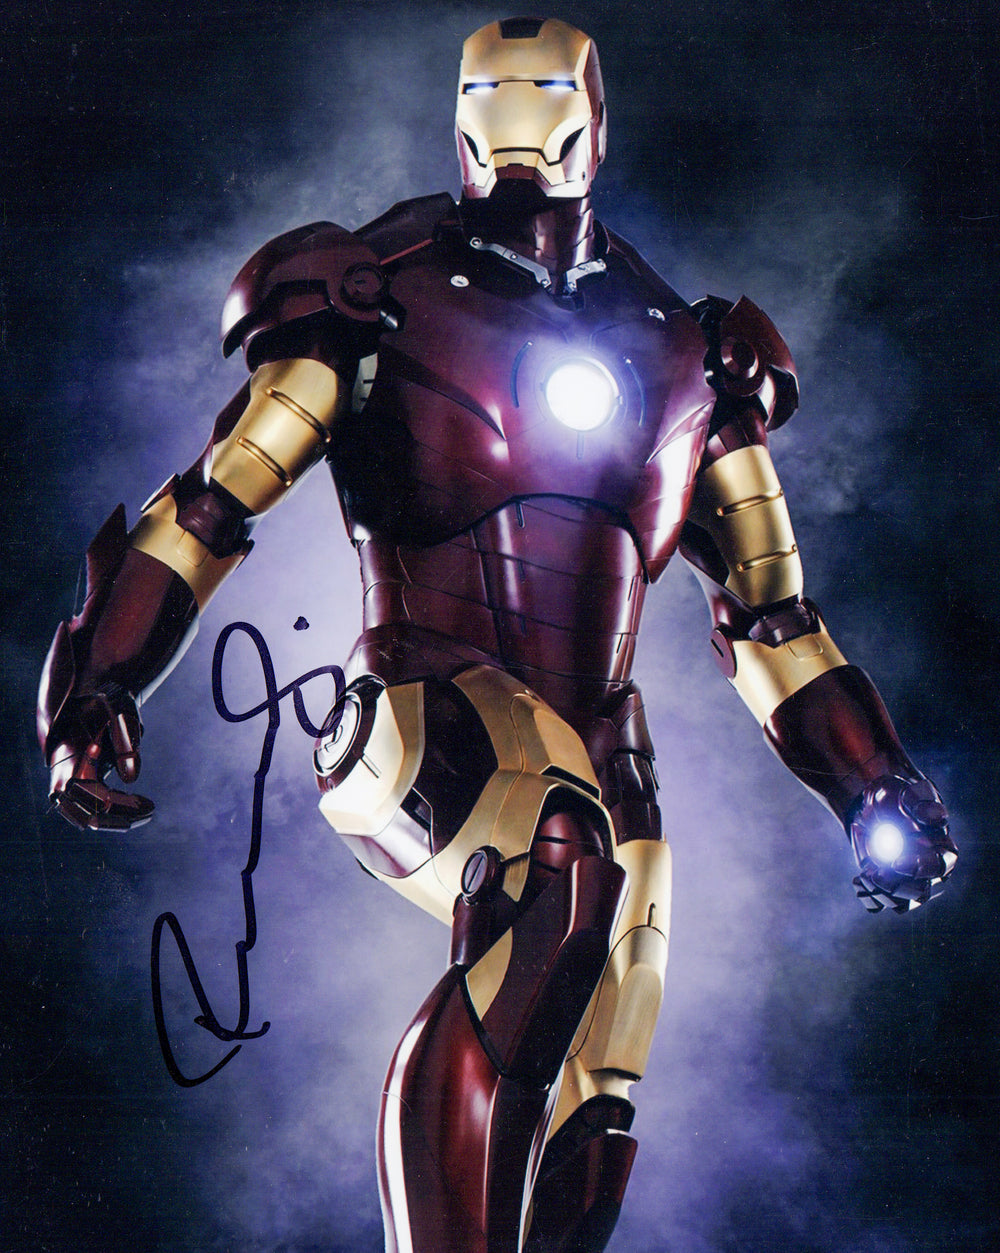 Robert Downey Jr. as Iron Man in Iron Man Signed 8x10 Photo